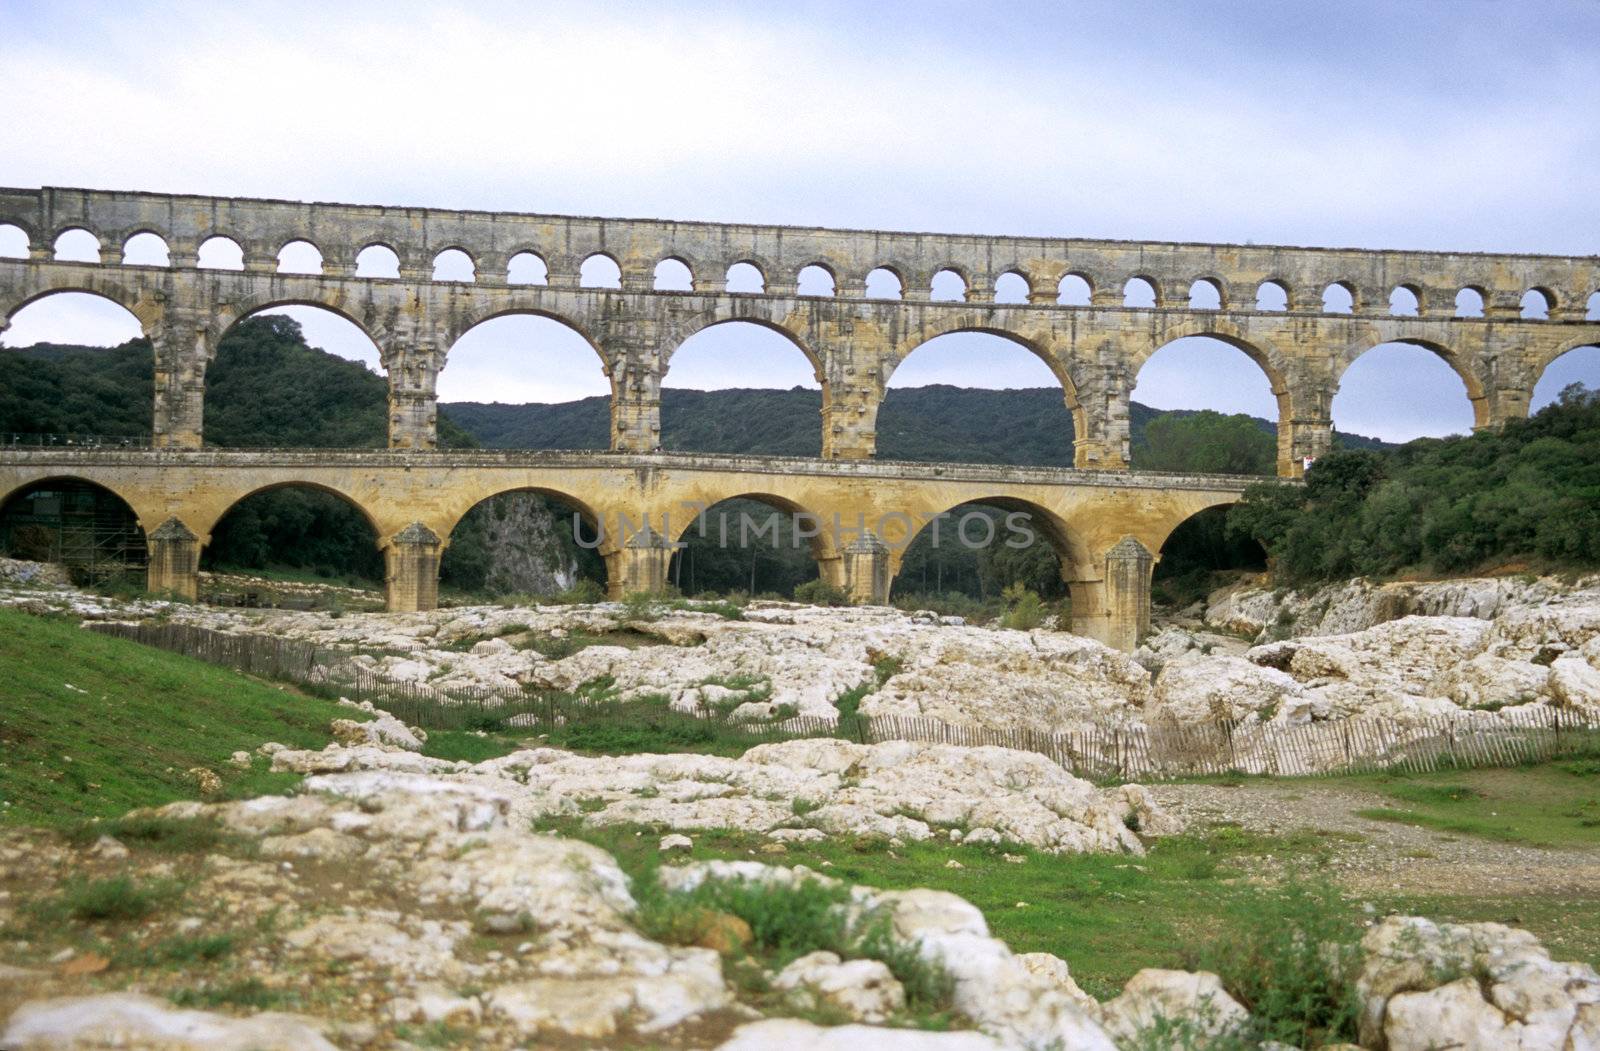 The ancient roman aqueduct Pont du Gard in Provence, France.